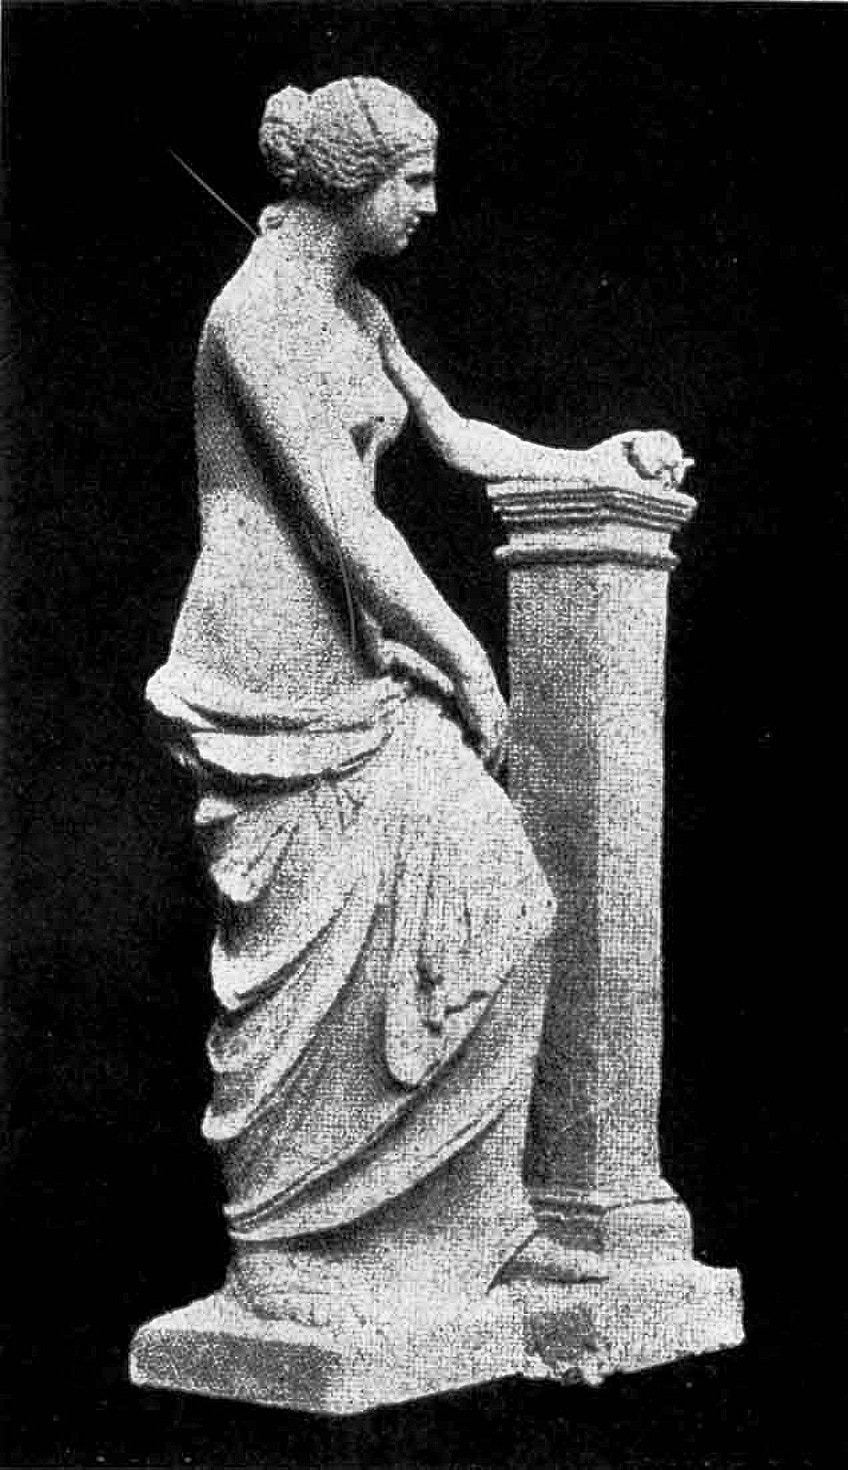 Venus de Milo Sculpture with Arms